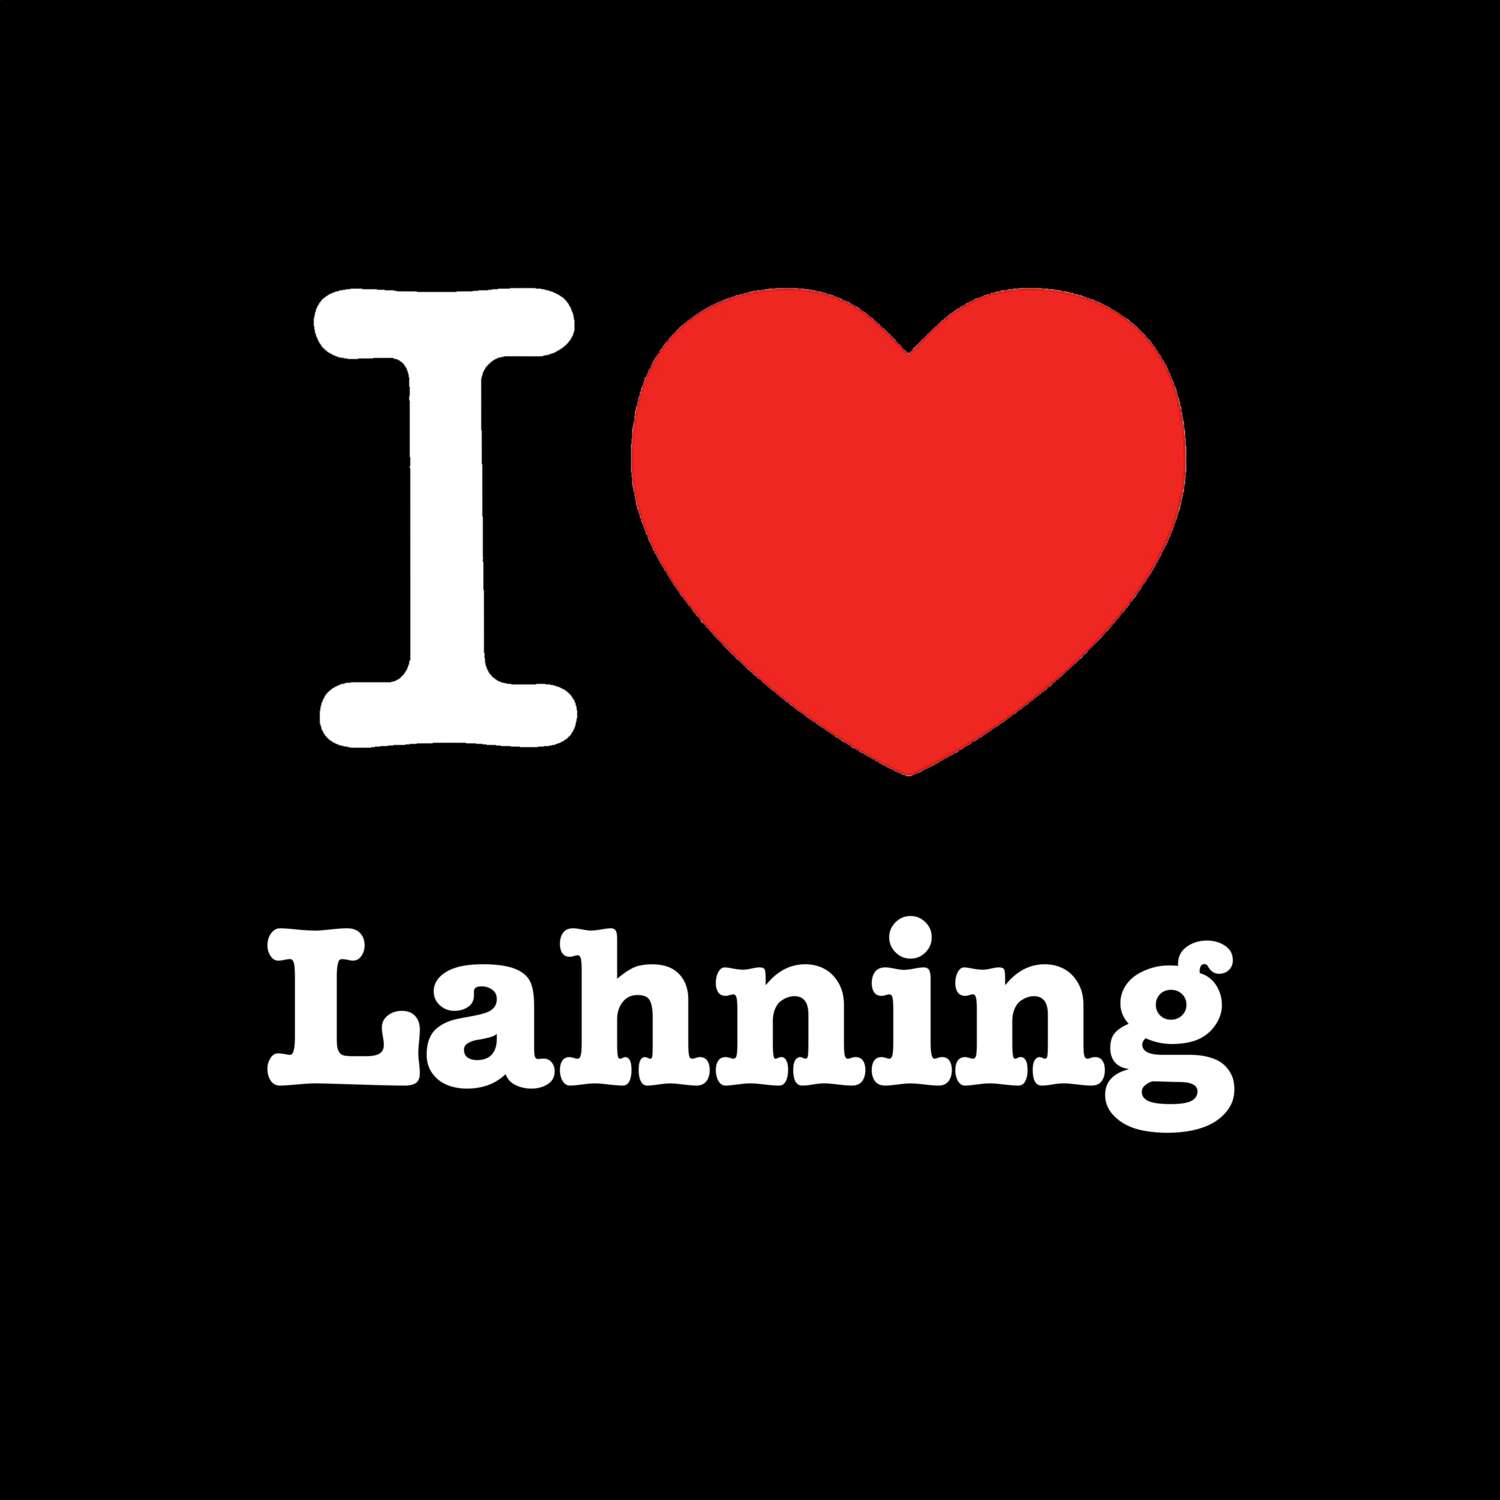 Lahning T-Shirt »I love«